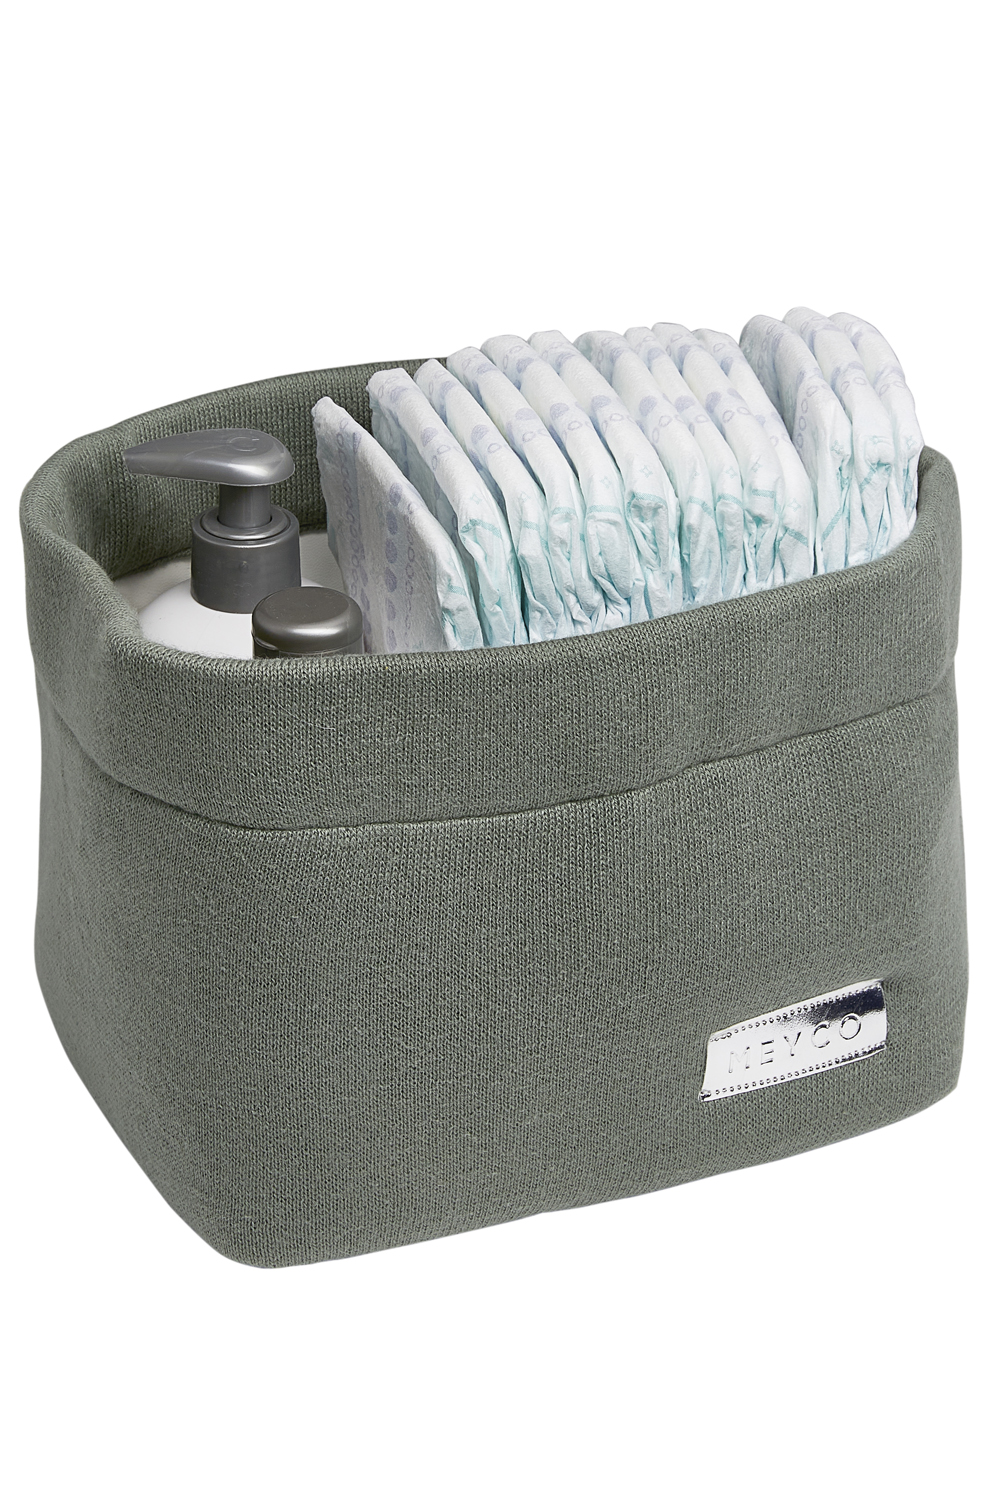 Nursery basket Knit Basic - forest green - Medium